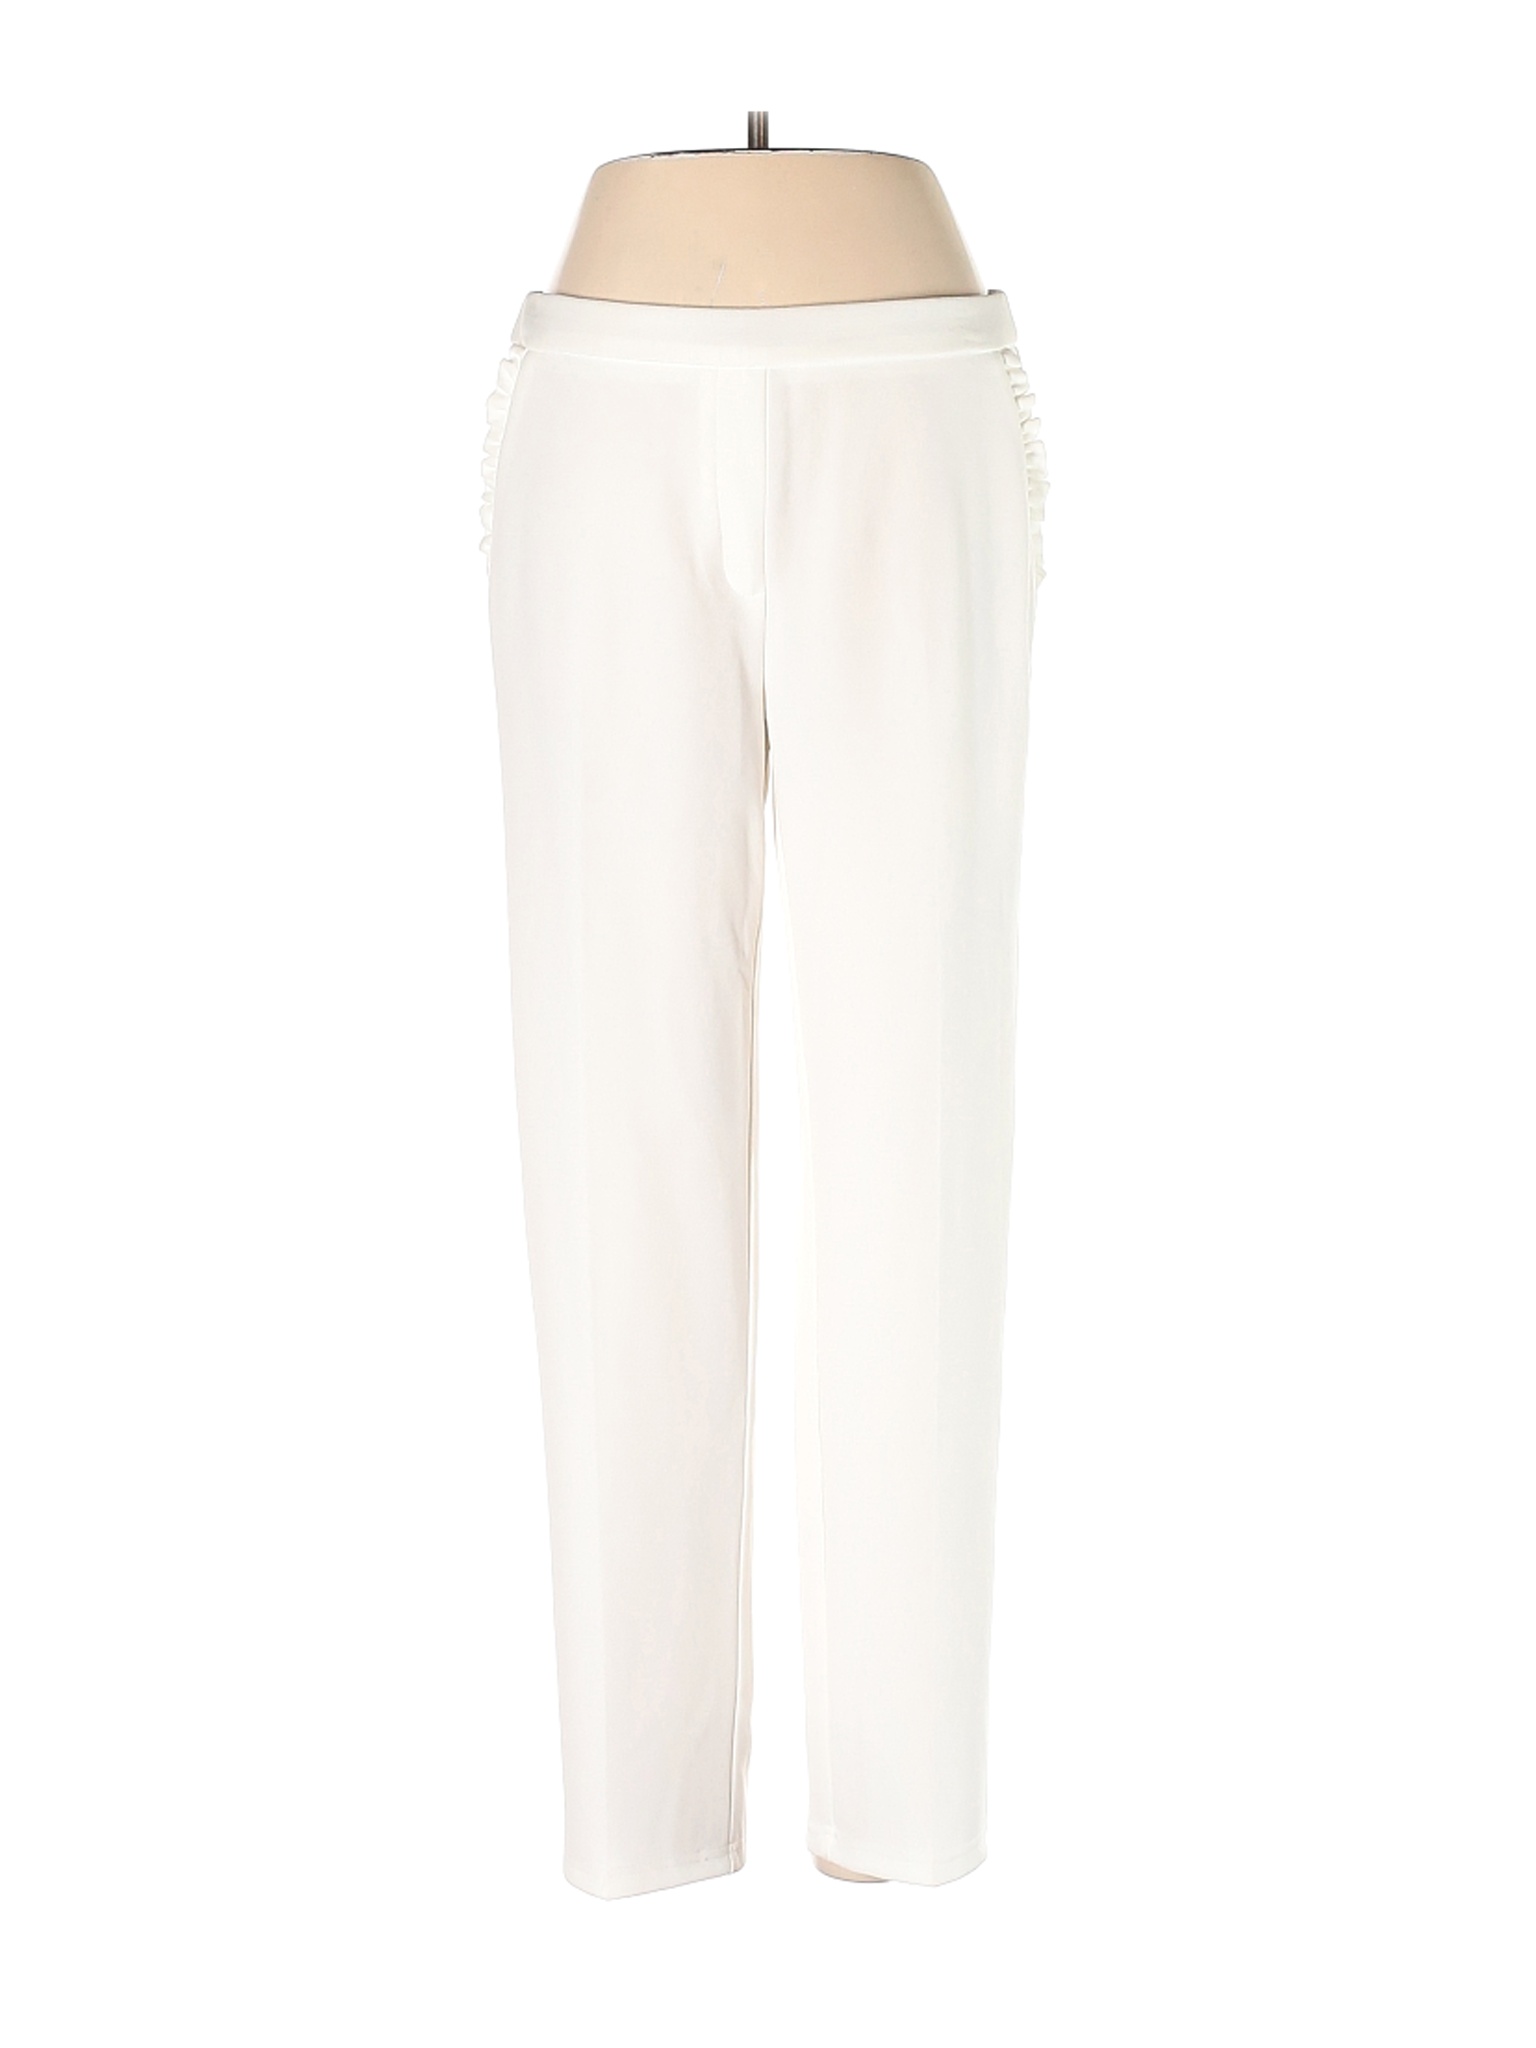 Hope & Harlow Women White Casual Pants 6 | eBay